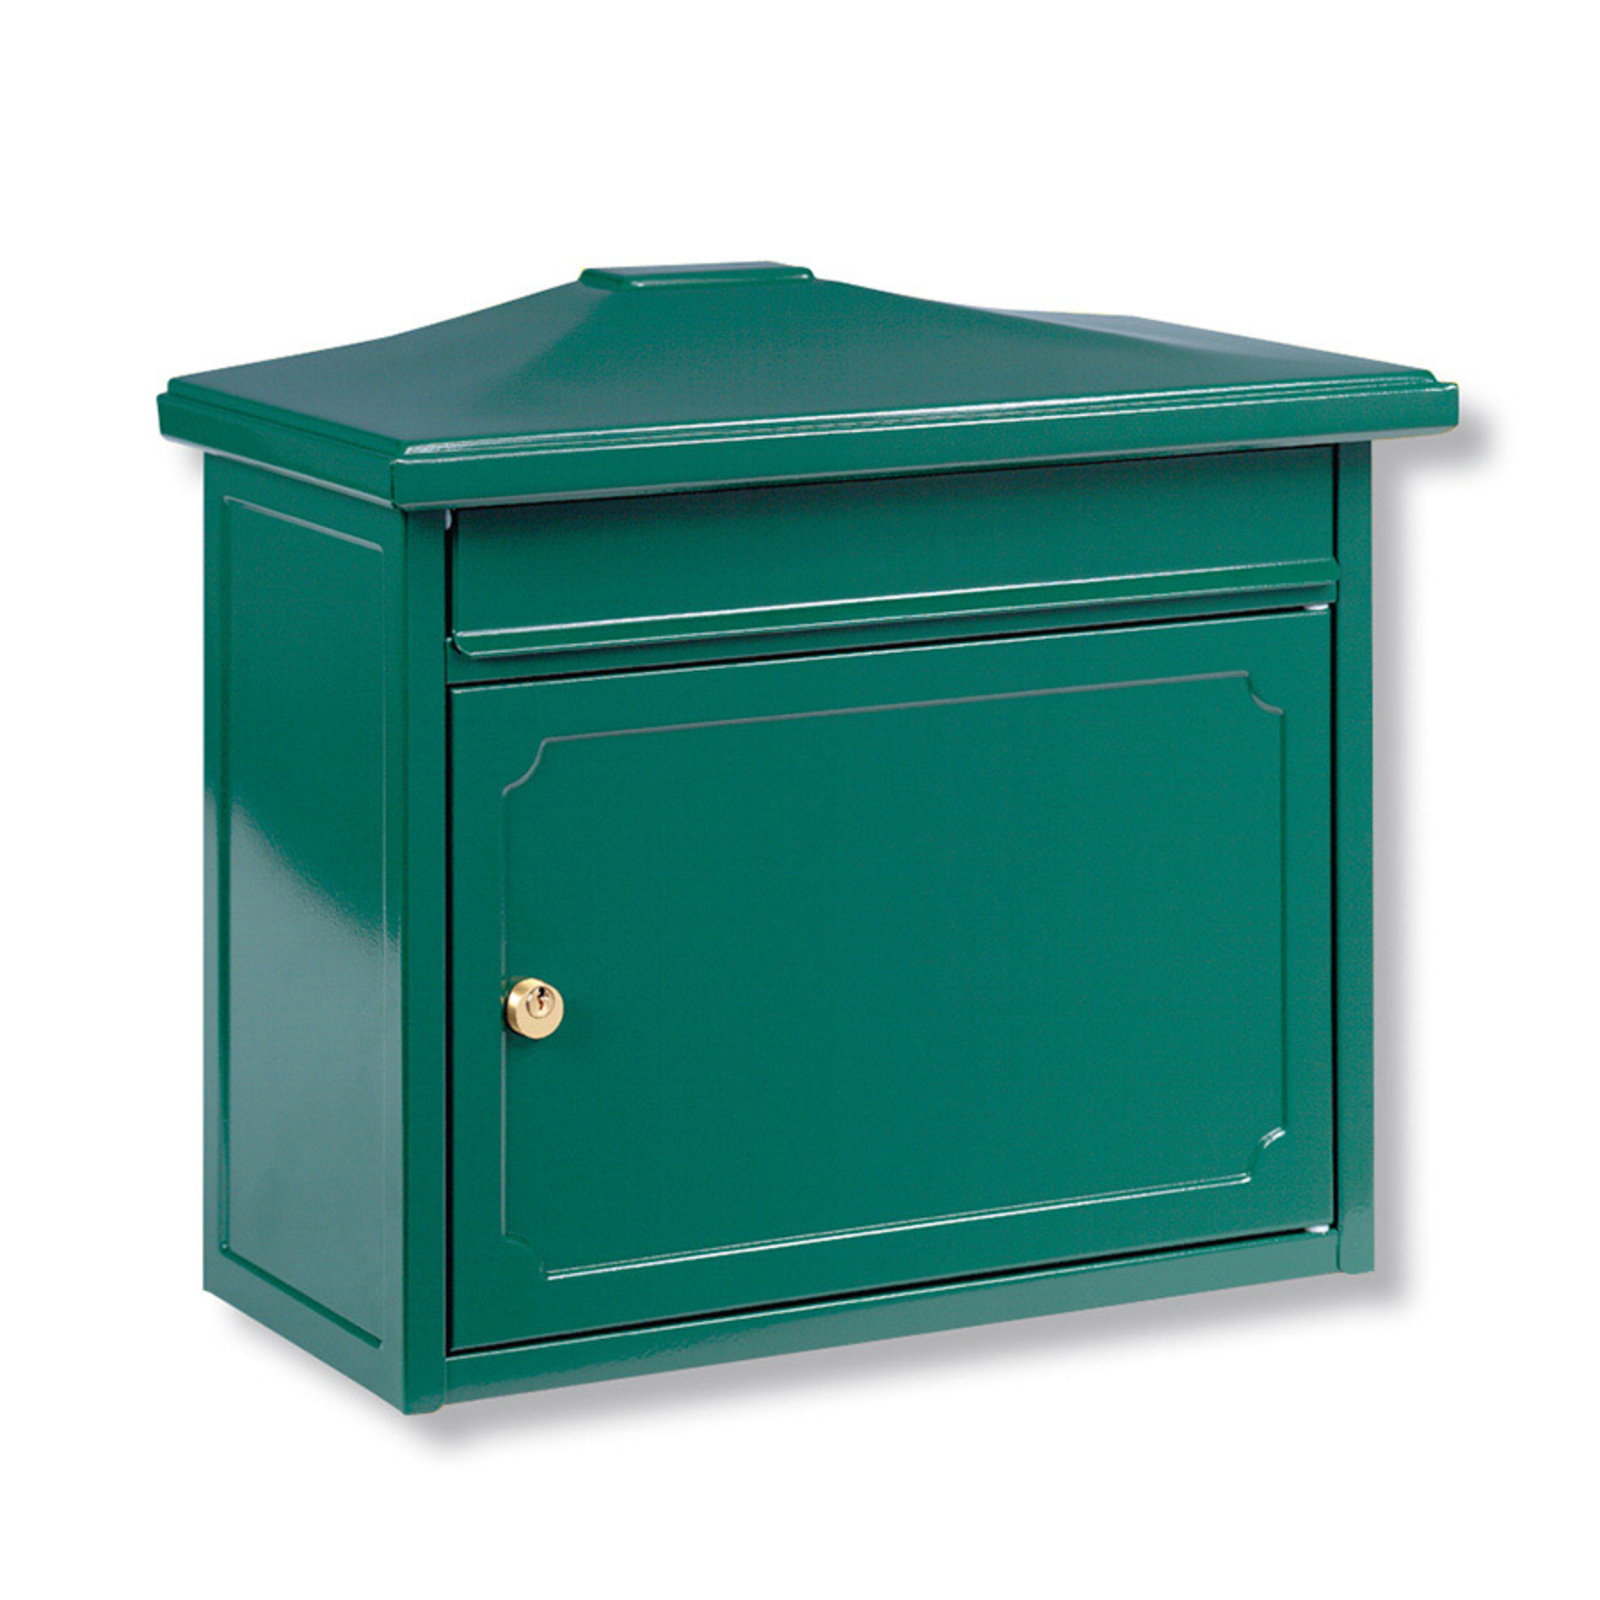 Copenhagen letter box in green